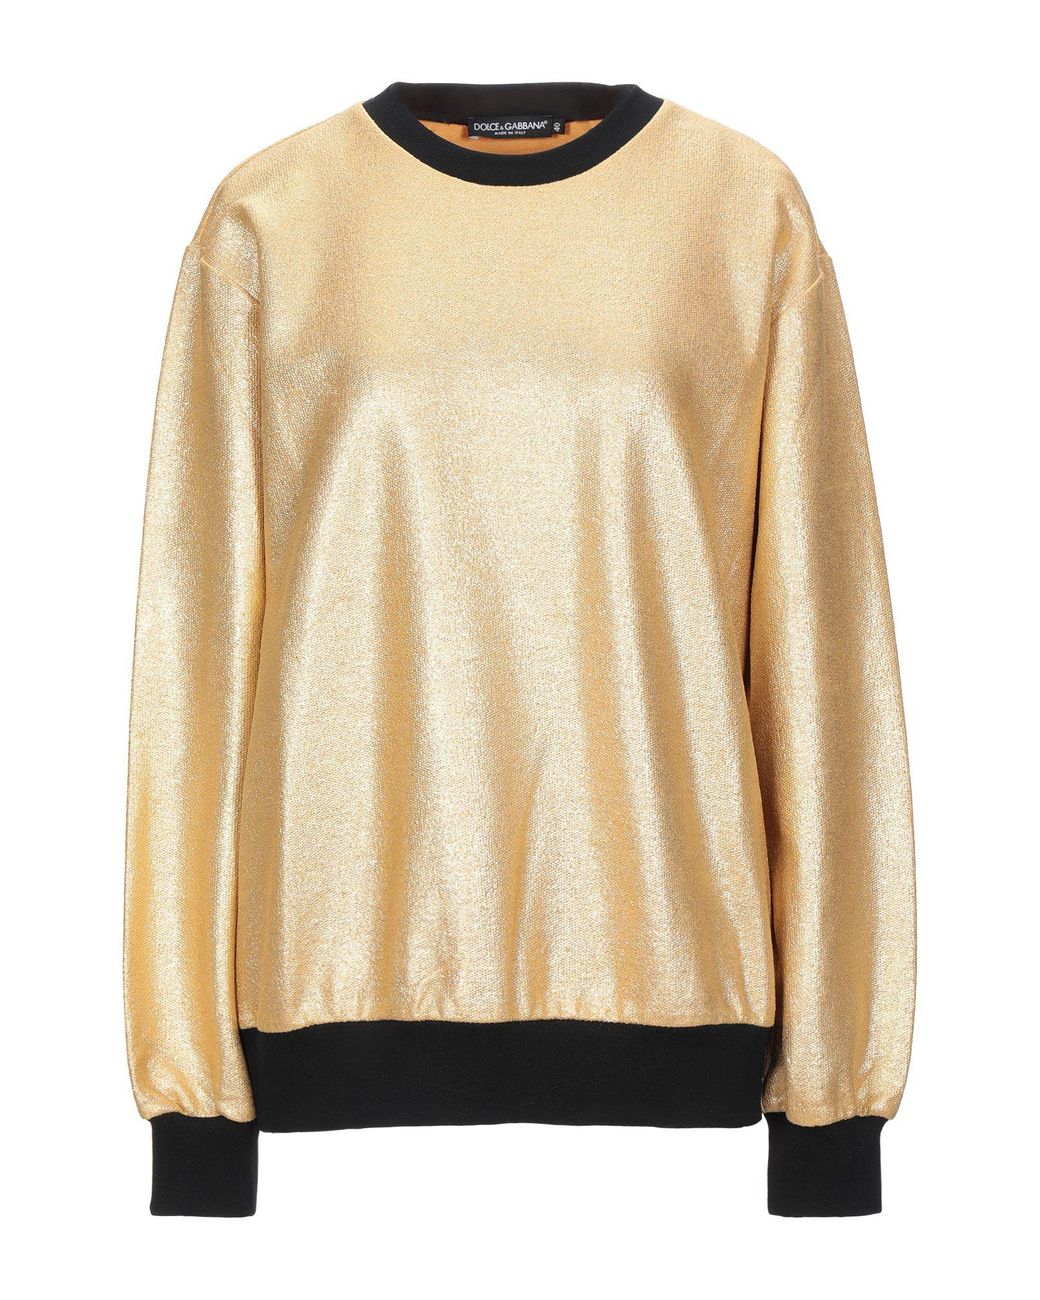 Dolce & Gabbana Fleece Sweatshirt in Gold (Metallic) - Lyst